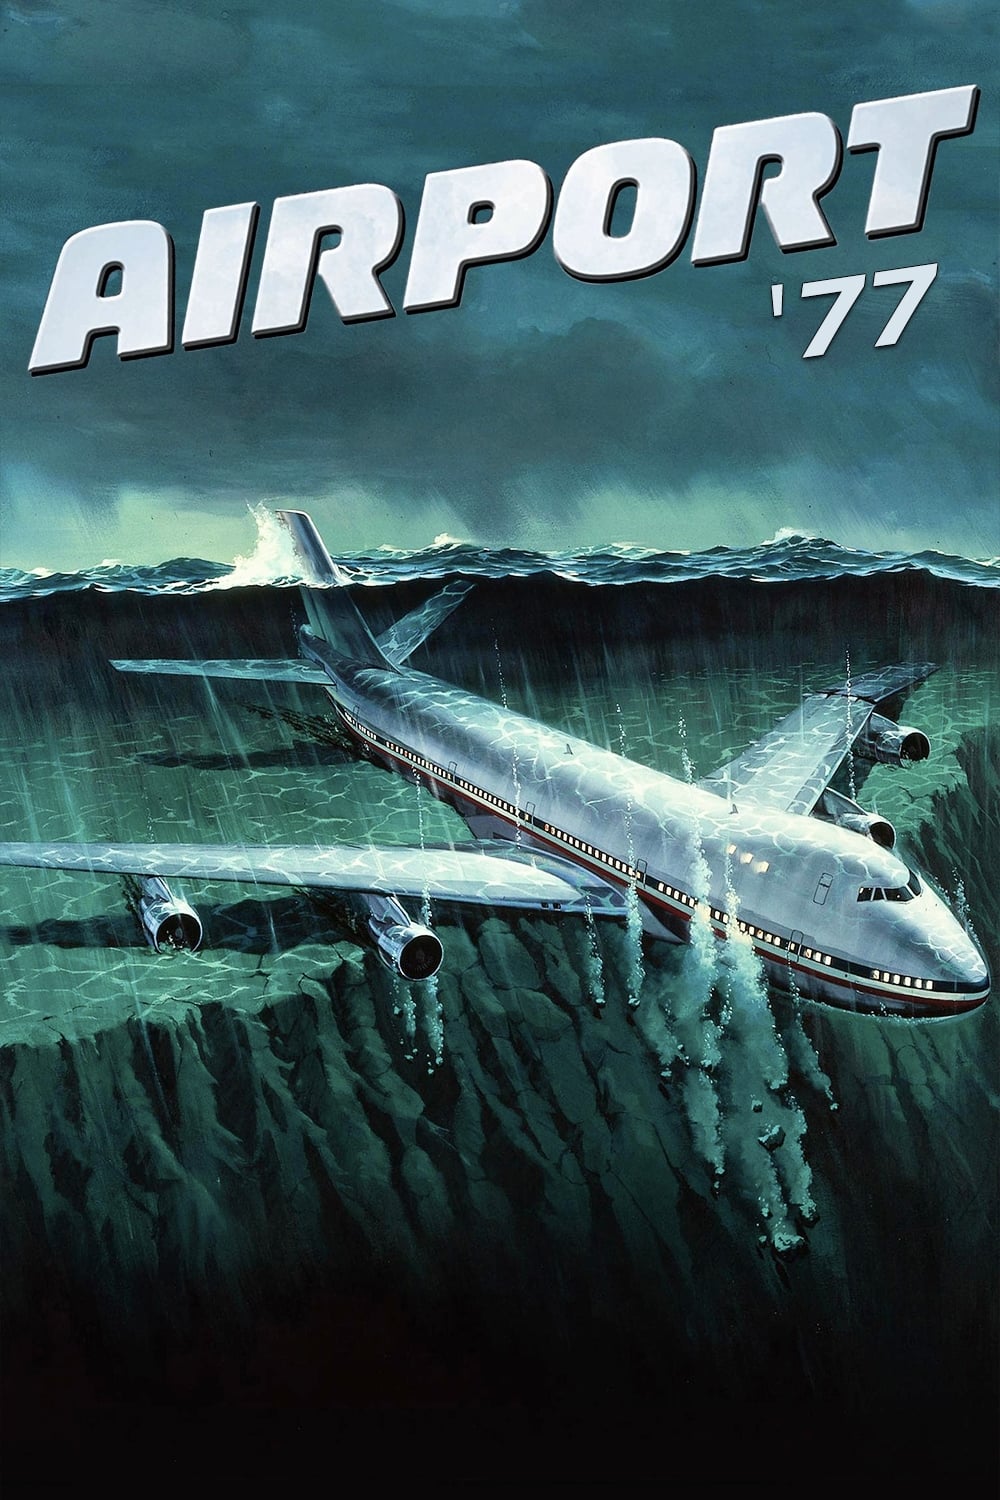 Les Naufragés du 747 (1977)